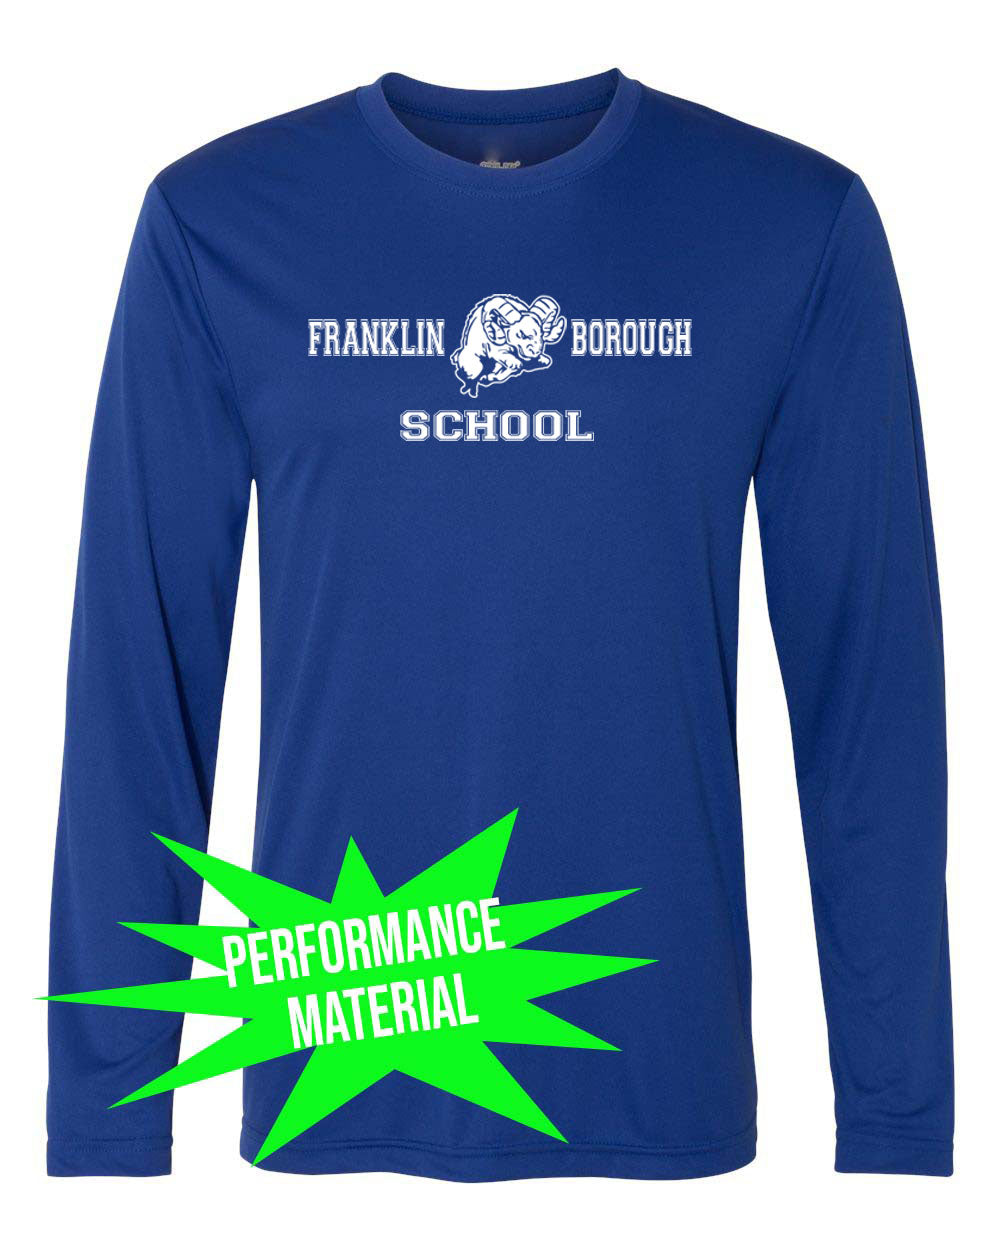 Franklin School Performance Material Design 3 Long Sleeve Shirt